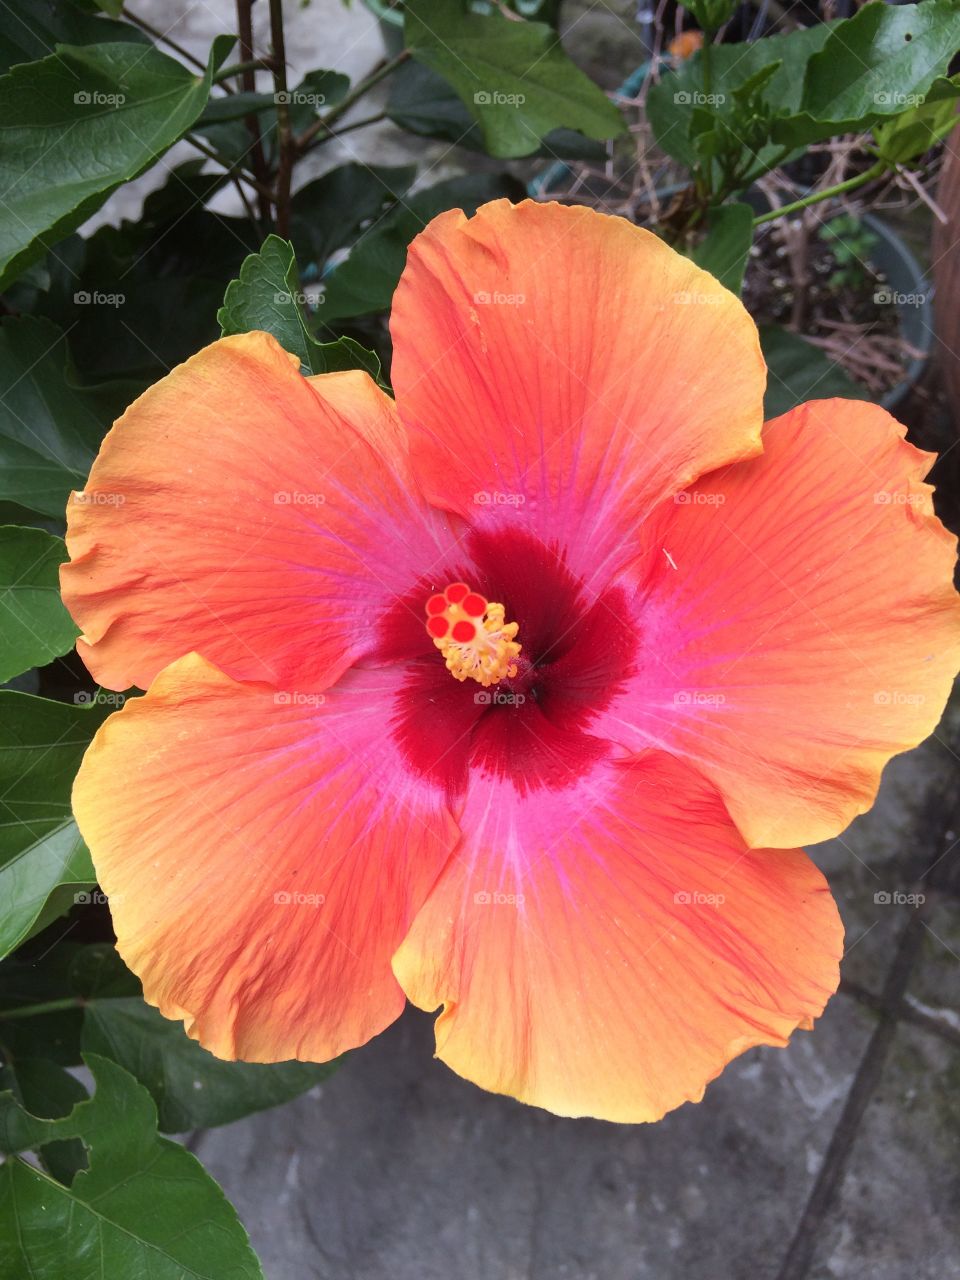 Bright orange with pink center hibiscus bloom, close up